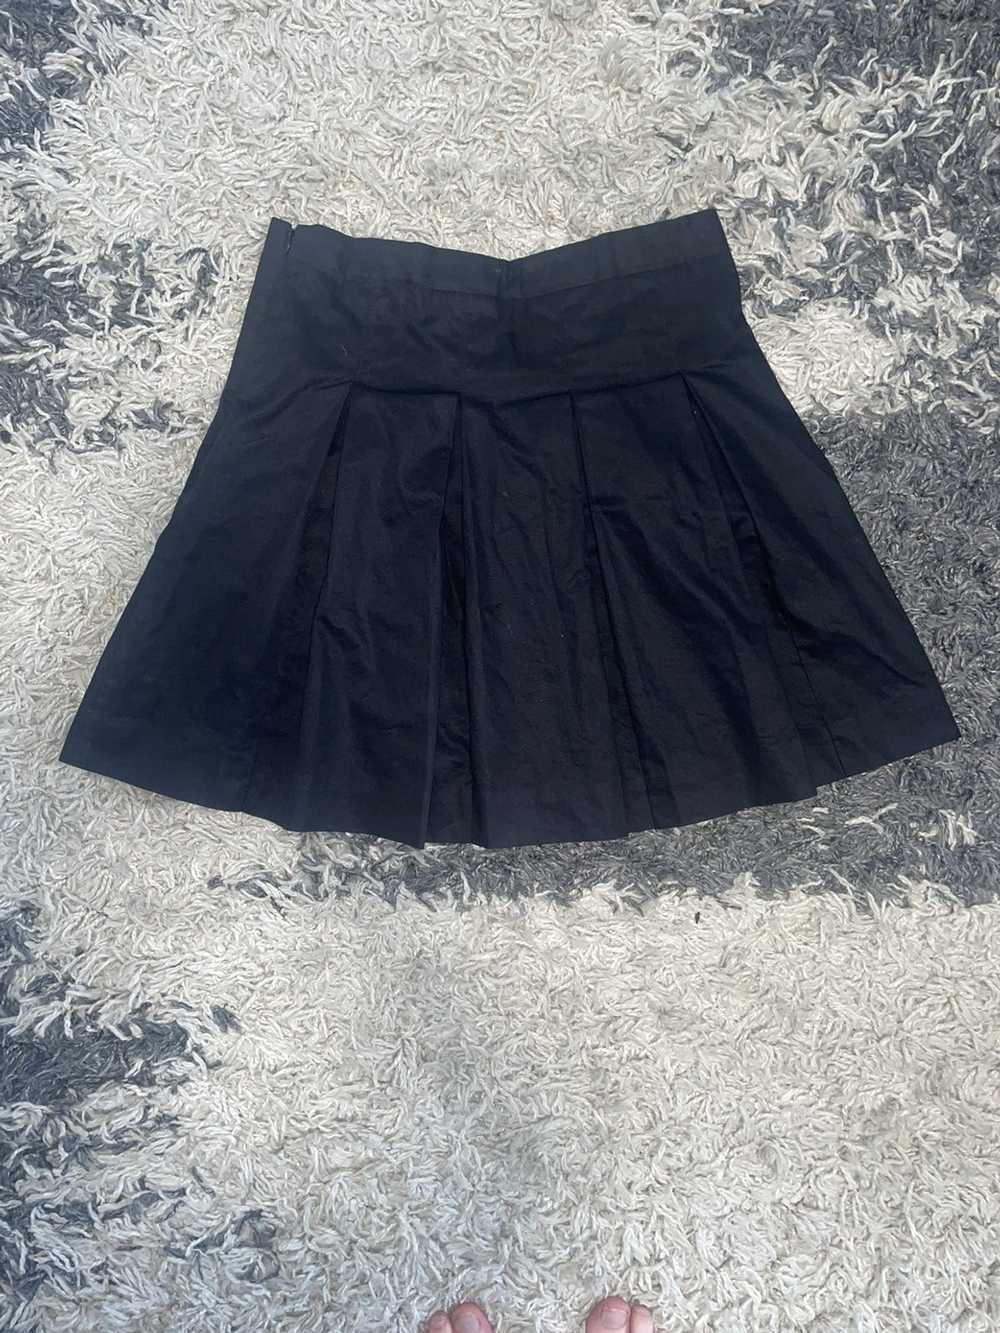 Burberry Burberry pleated mini skirt - image 2